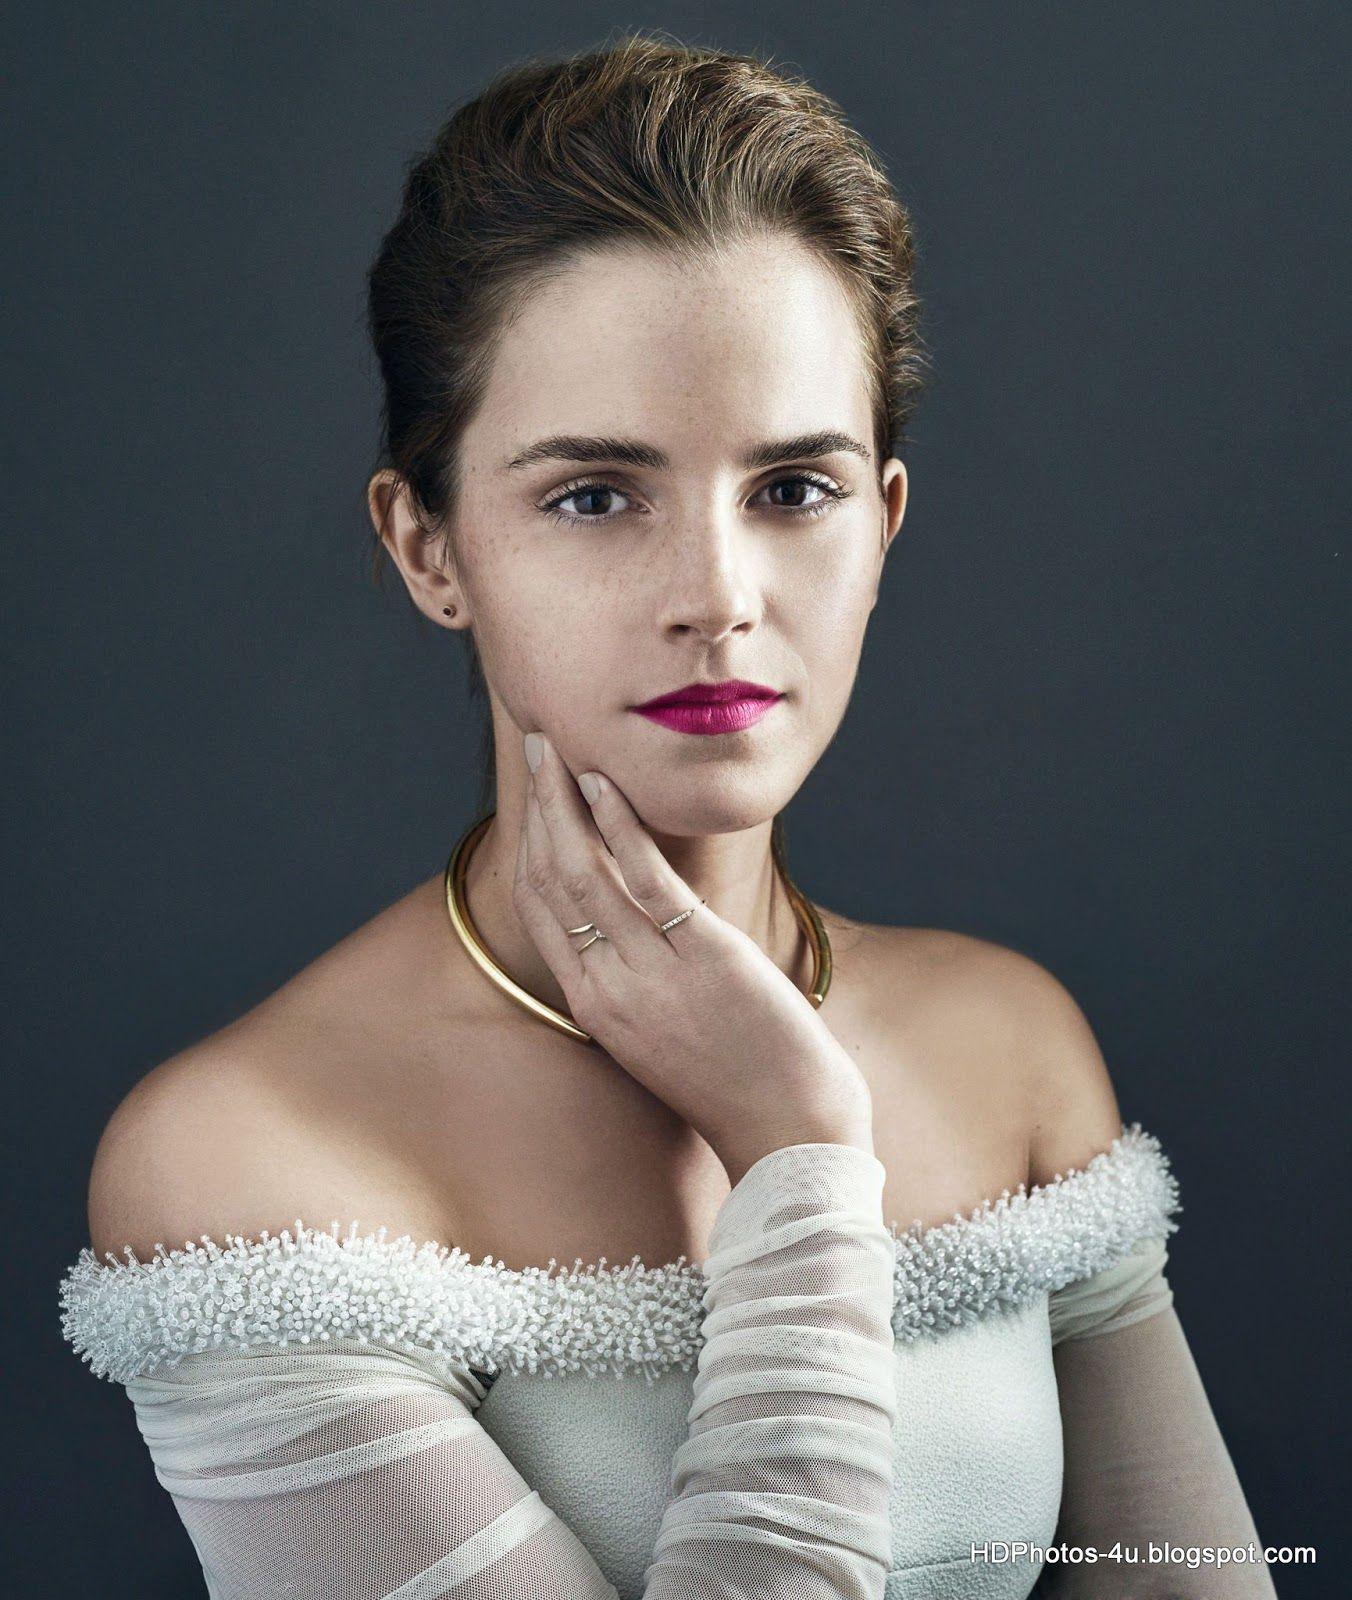 Celebrity Photo: Emma Watson at BAFTA 2014 Jaguar Britannia